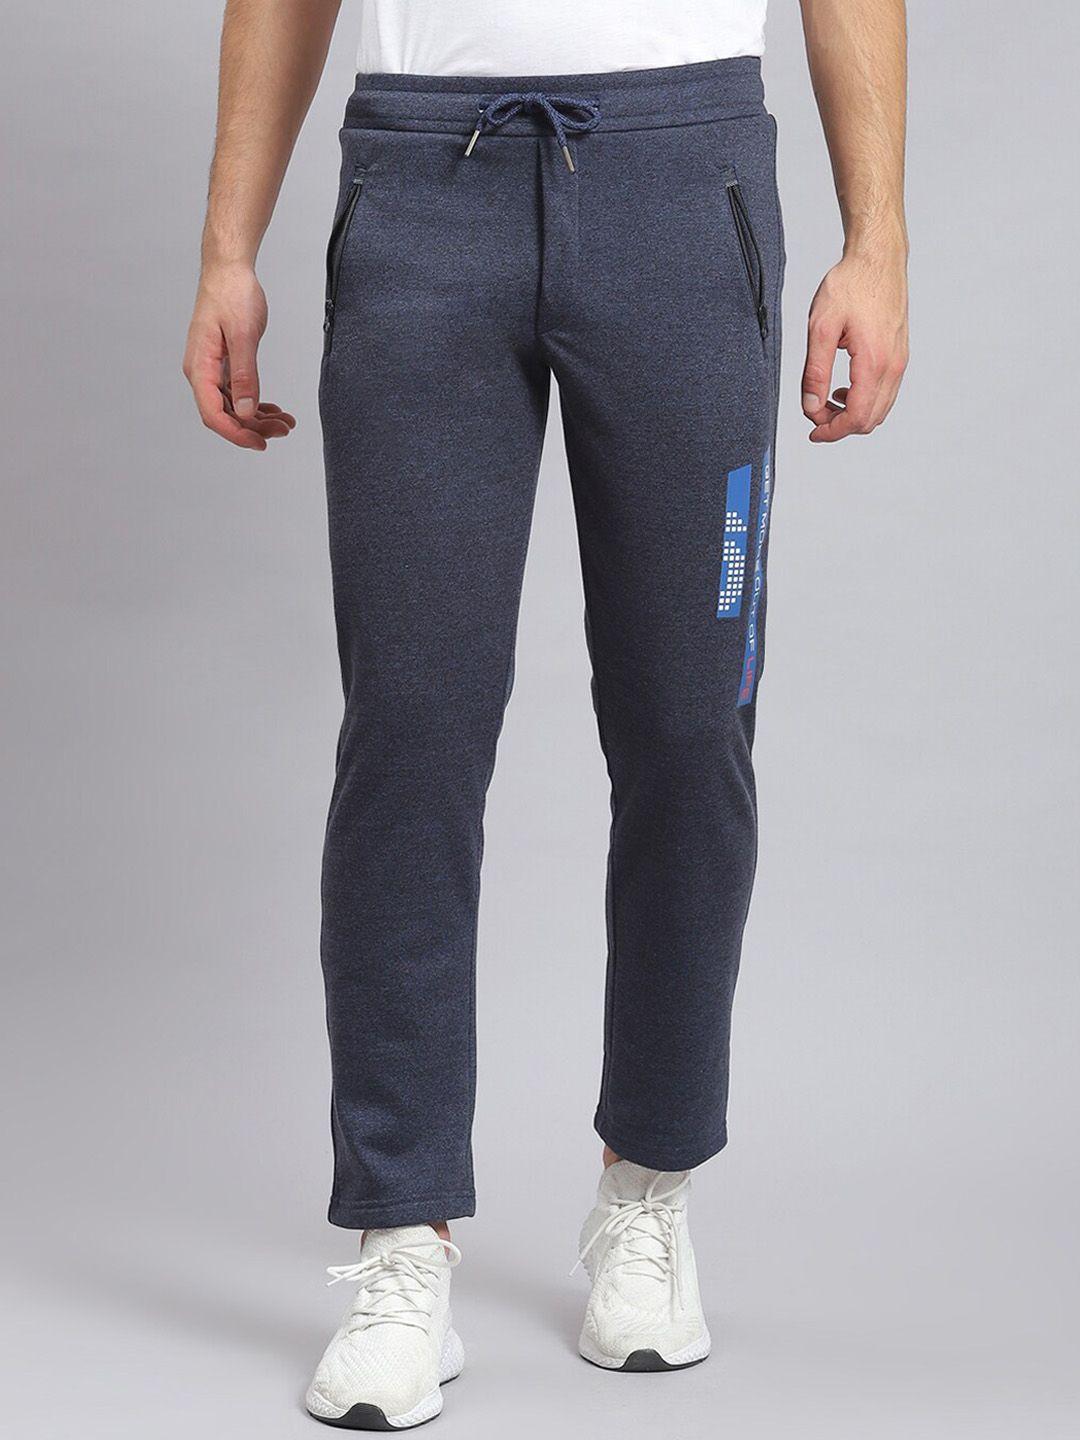 monte-carlo-men-printed-mid-rise-cotton-track-pants